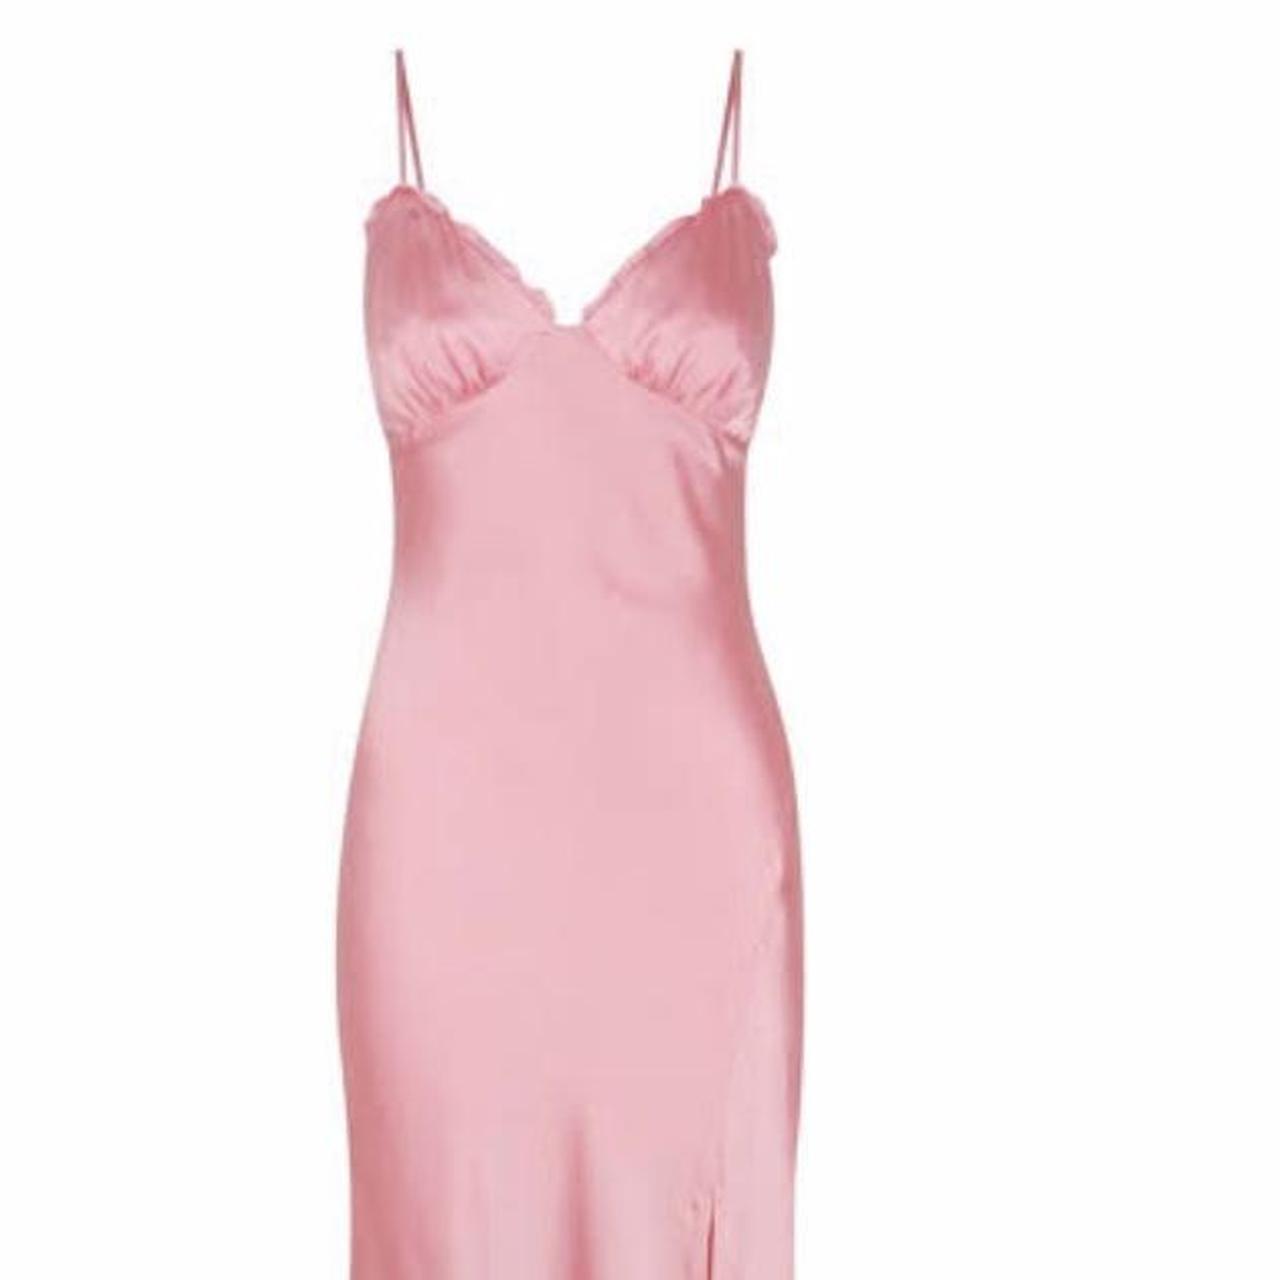 Hansen and Gretel Hayley Dress in Taffy Pink Size S... - Depop